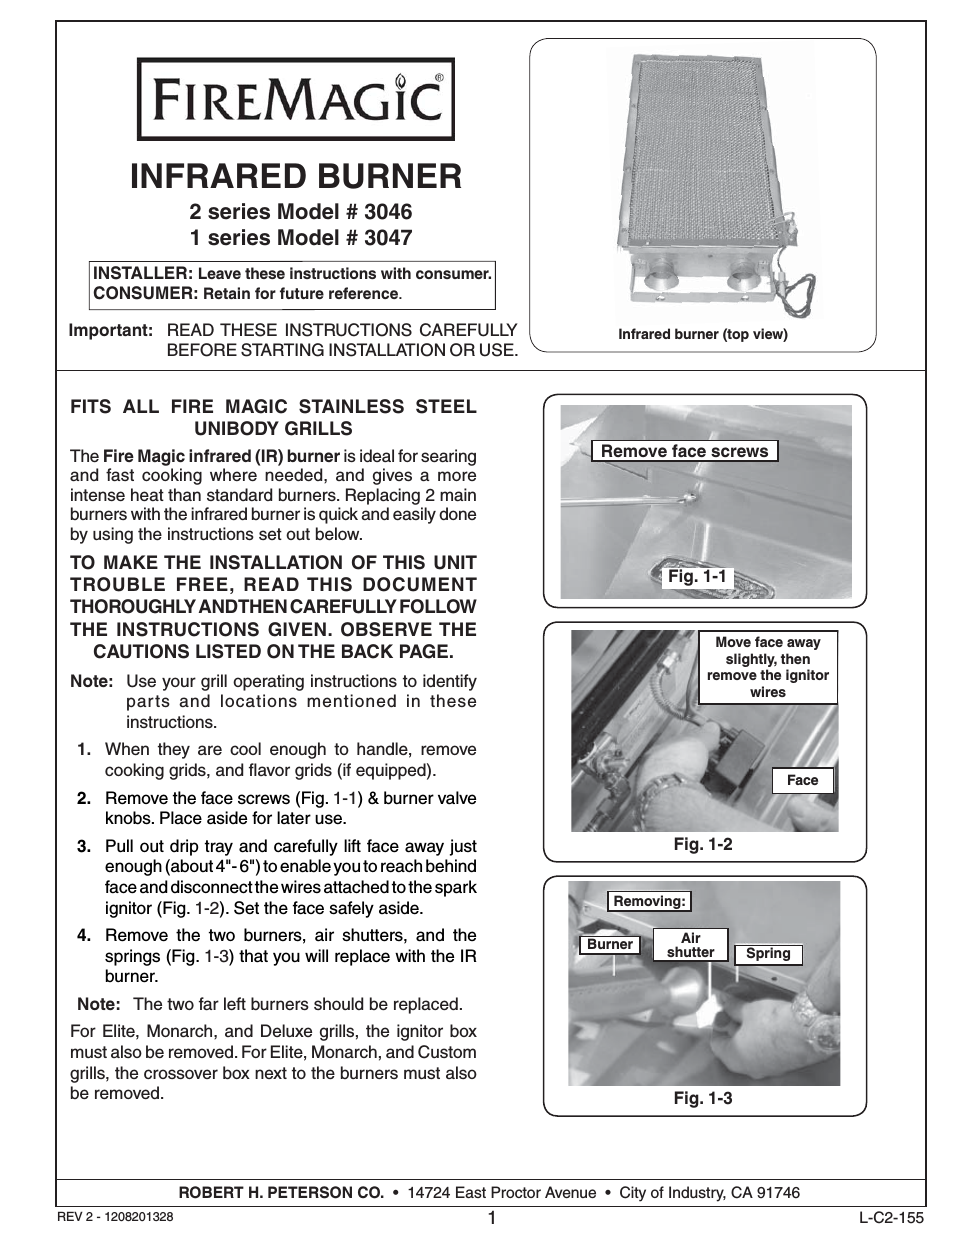 3047 Infrared Burner